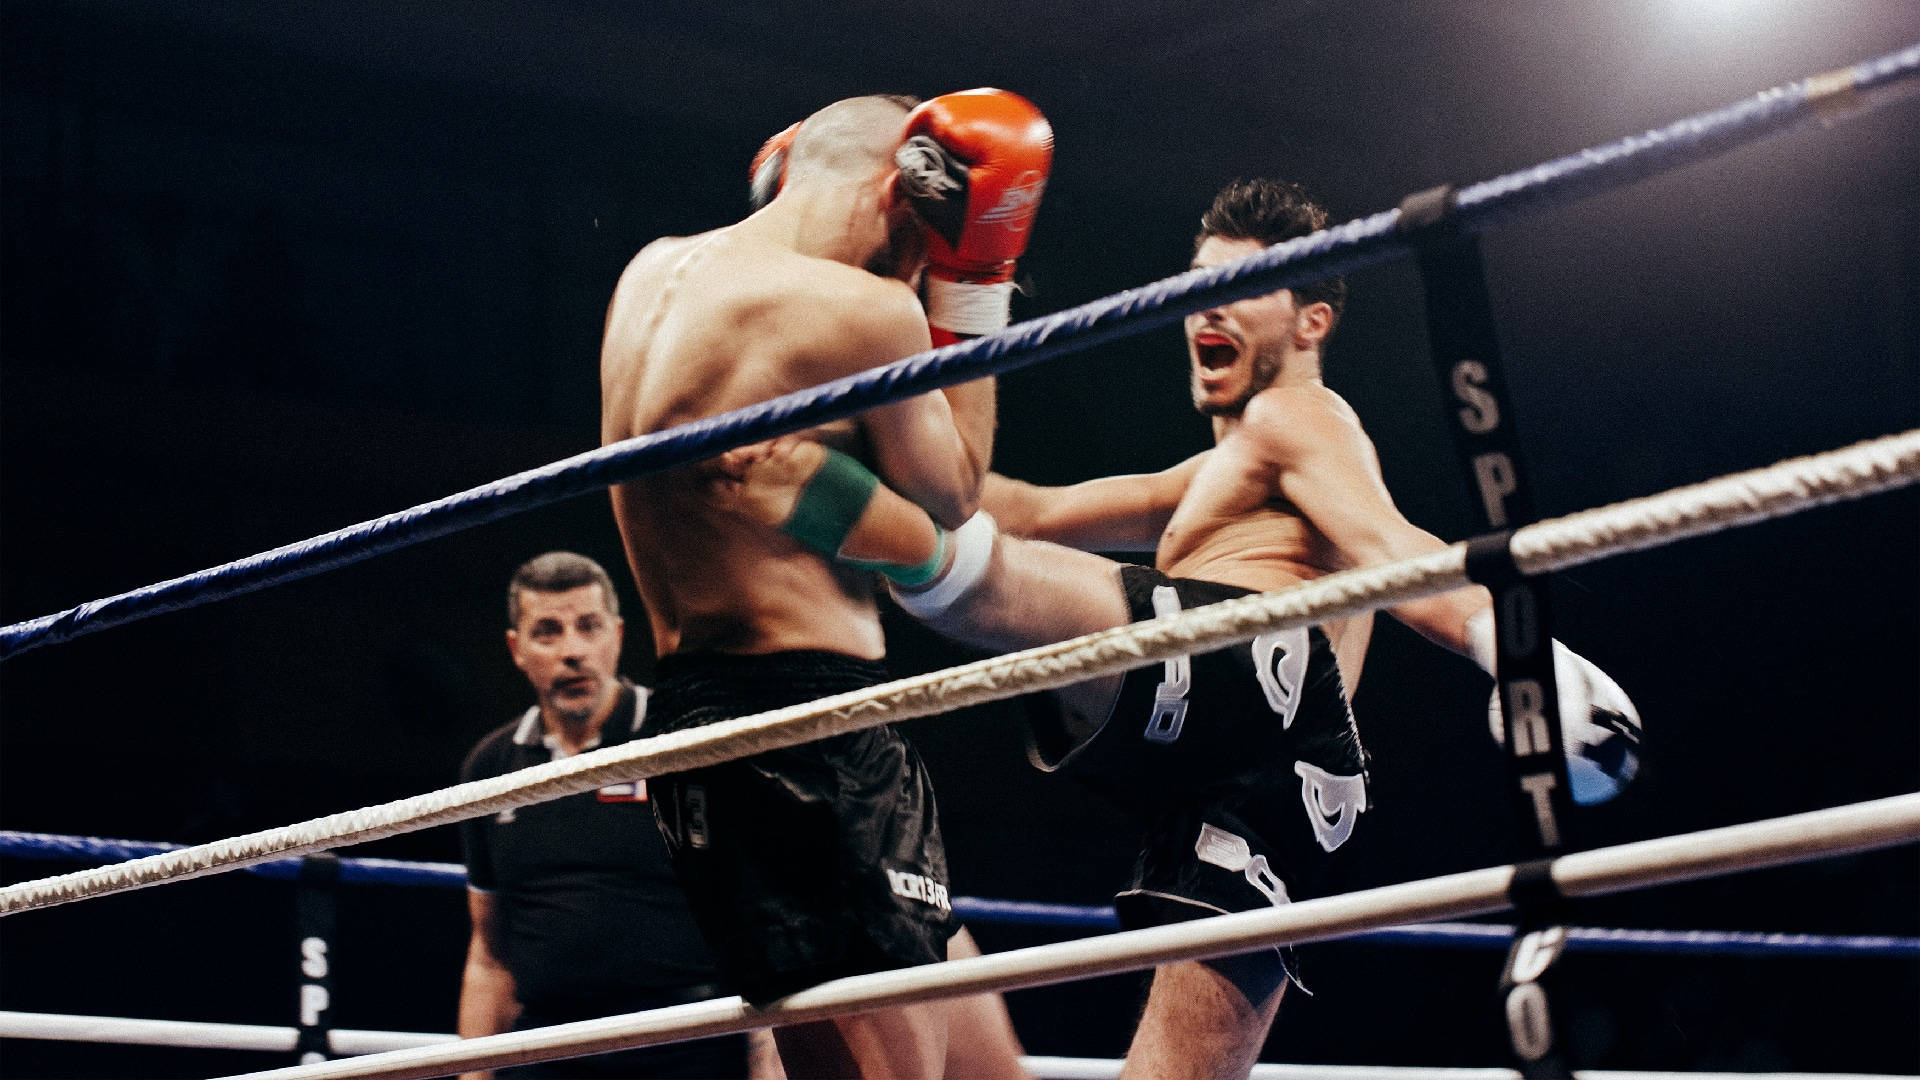 Intense Kickboxing Duel On The Ring Wallpaper